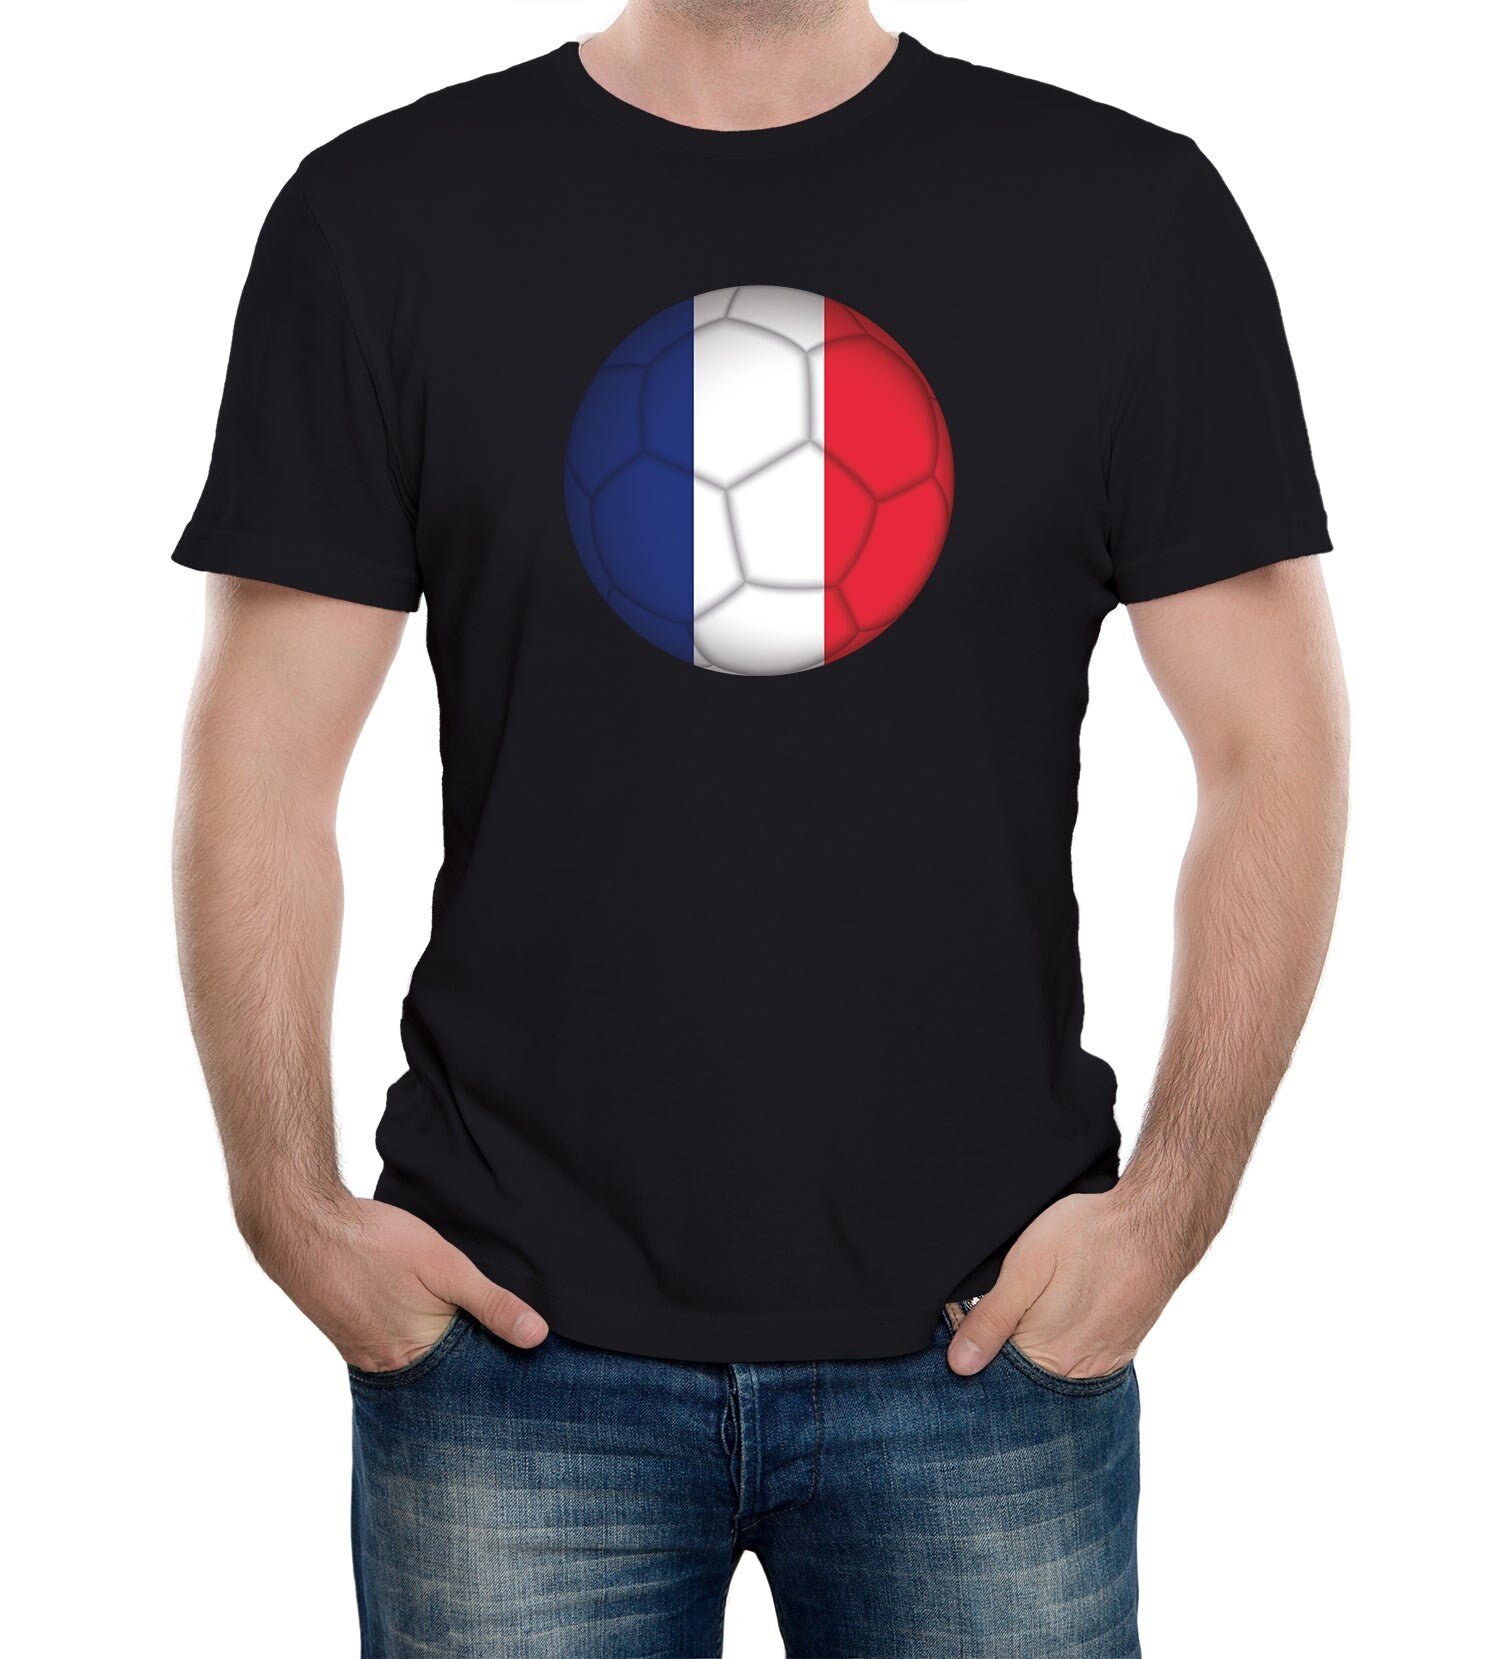 T-shirt Homme Fabulous - Drapeau Carte France Football USA - Blanc